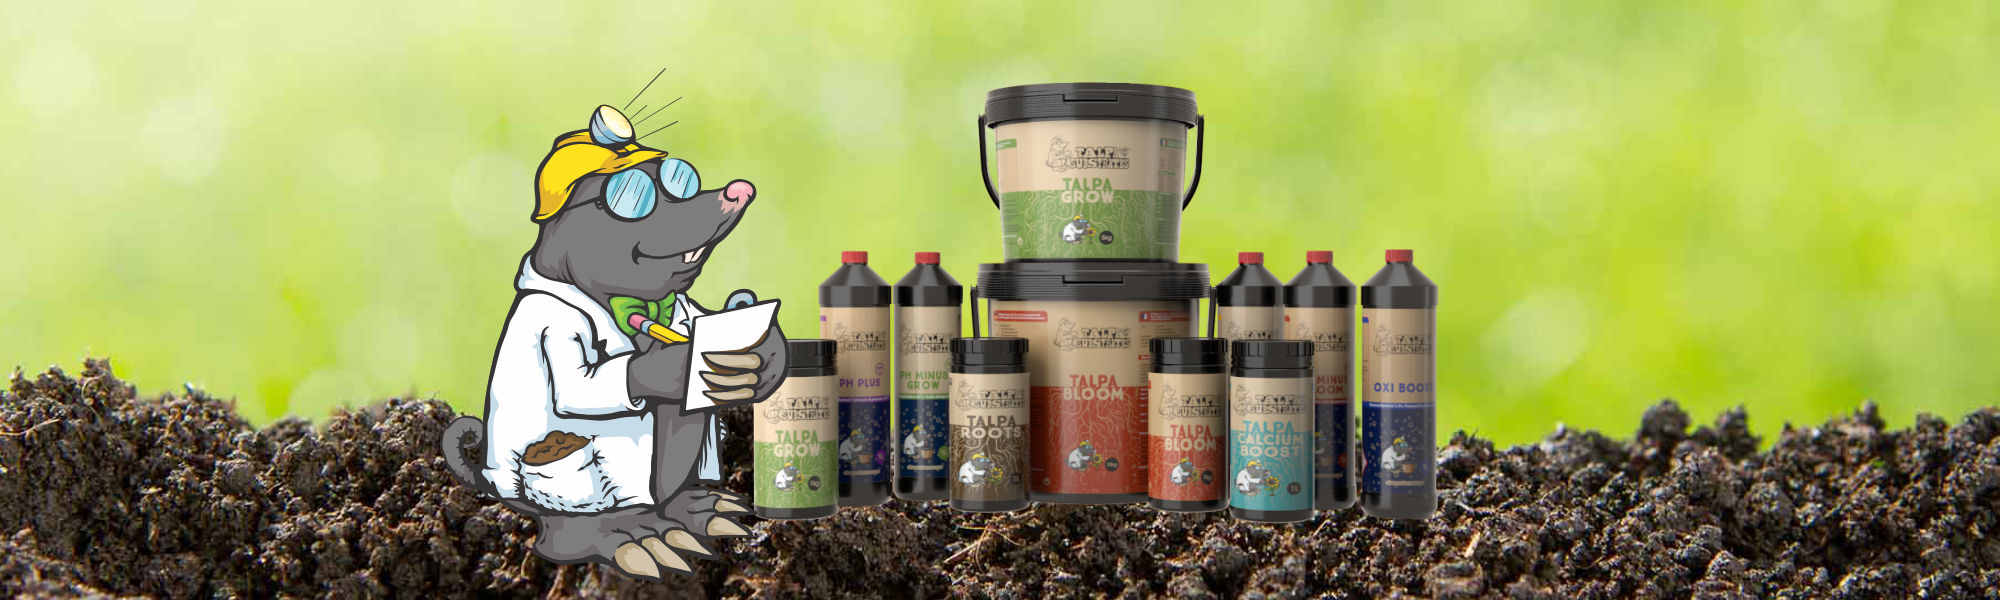 Talpa Subrates Mole Products